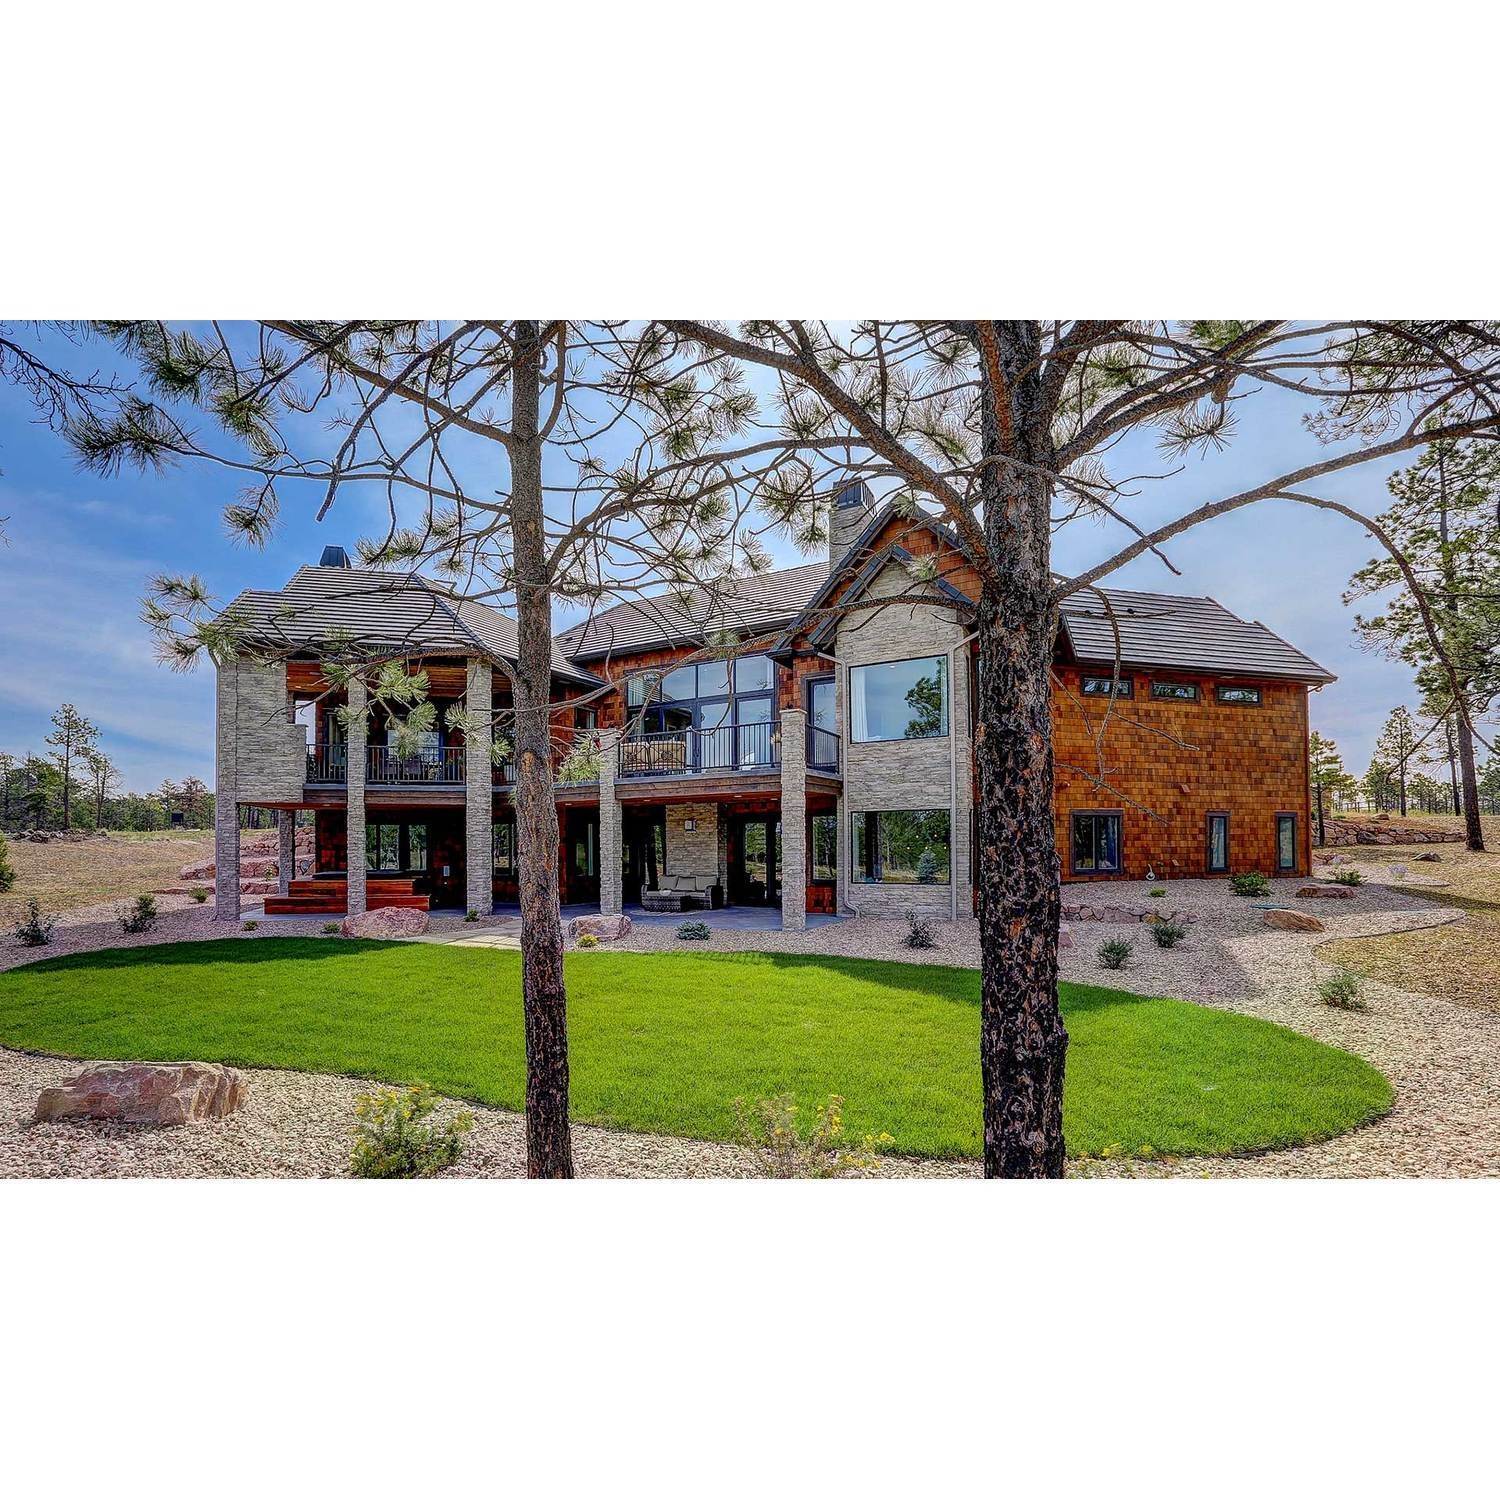 37. Galiant Homes building at 4783 Farmingdale Dr, Colorado Springs, CO 80918